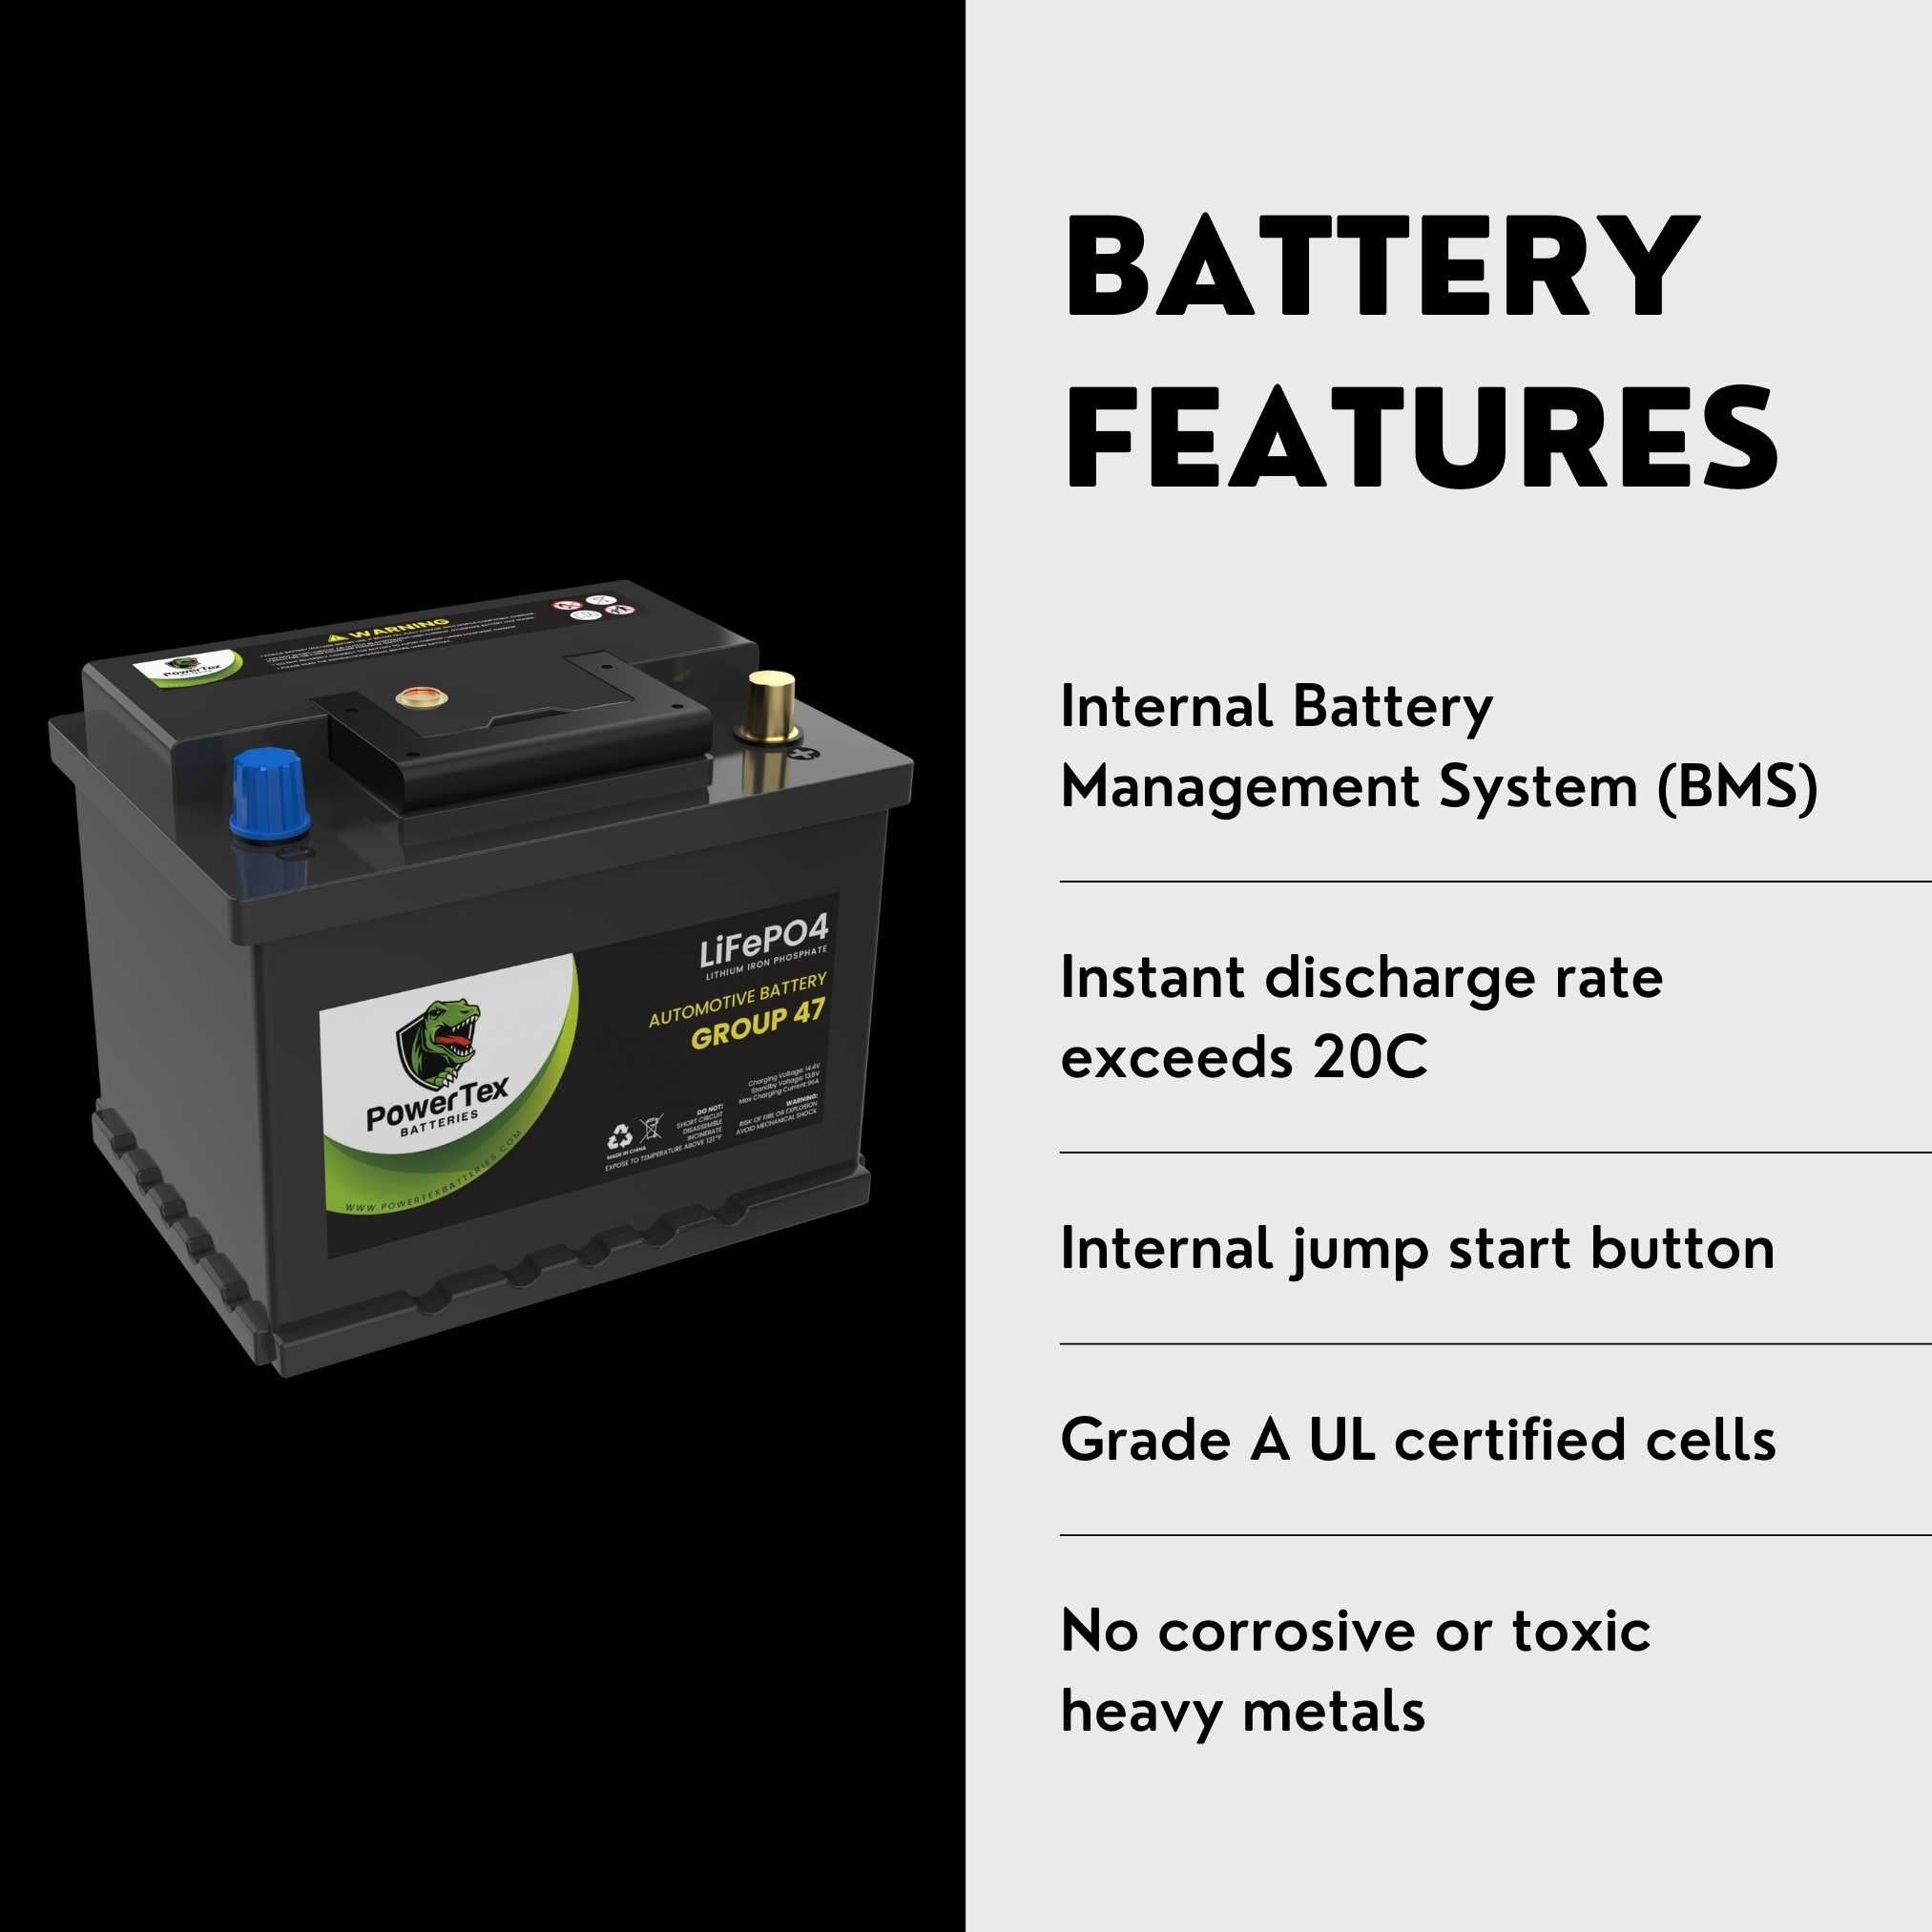 2019 BMW X3 Car Battery BCI Group 47 H5 Lithium LiFePO4 Automotive Battery